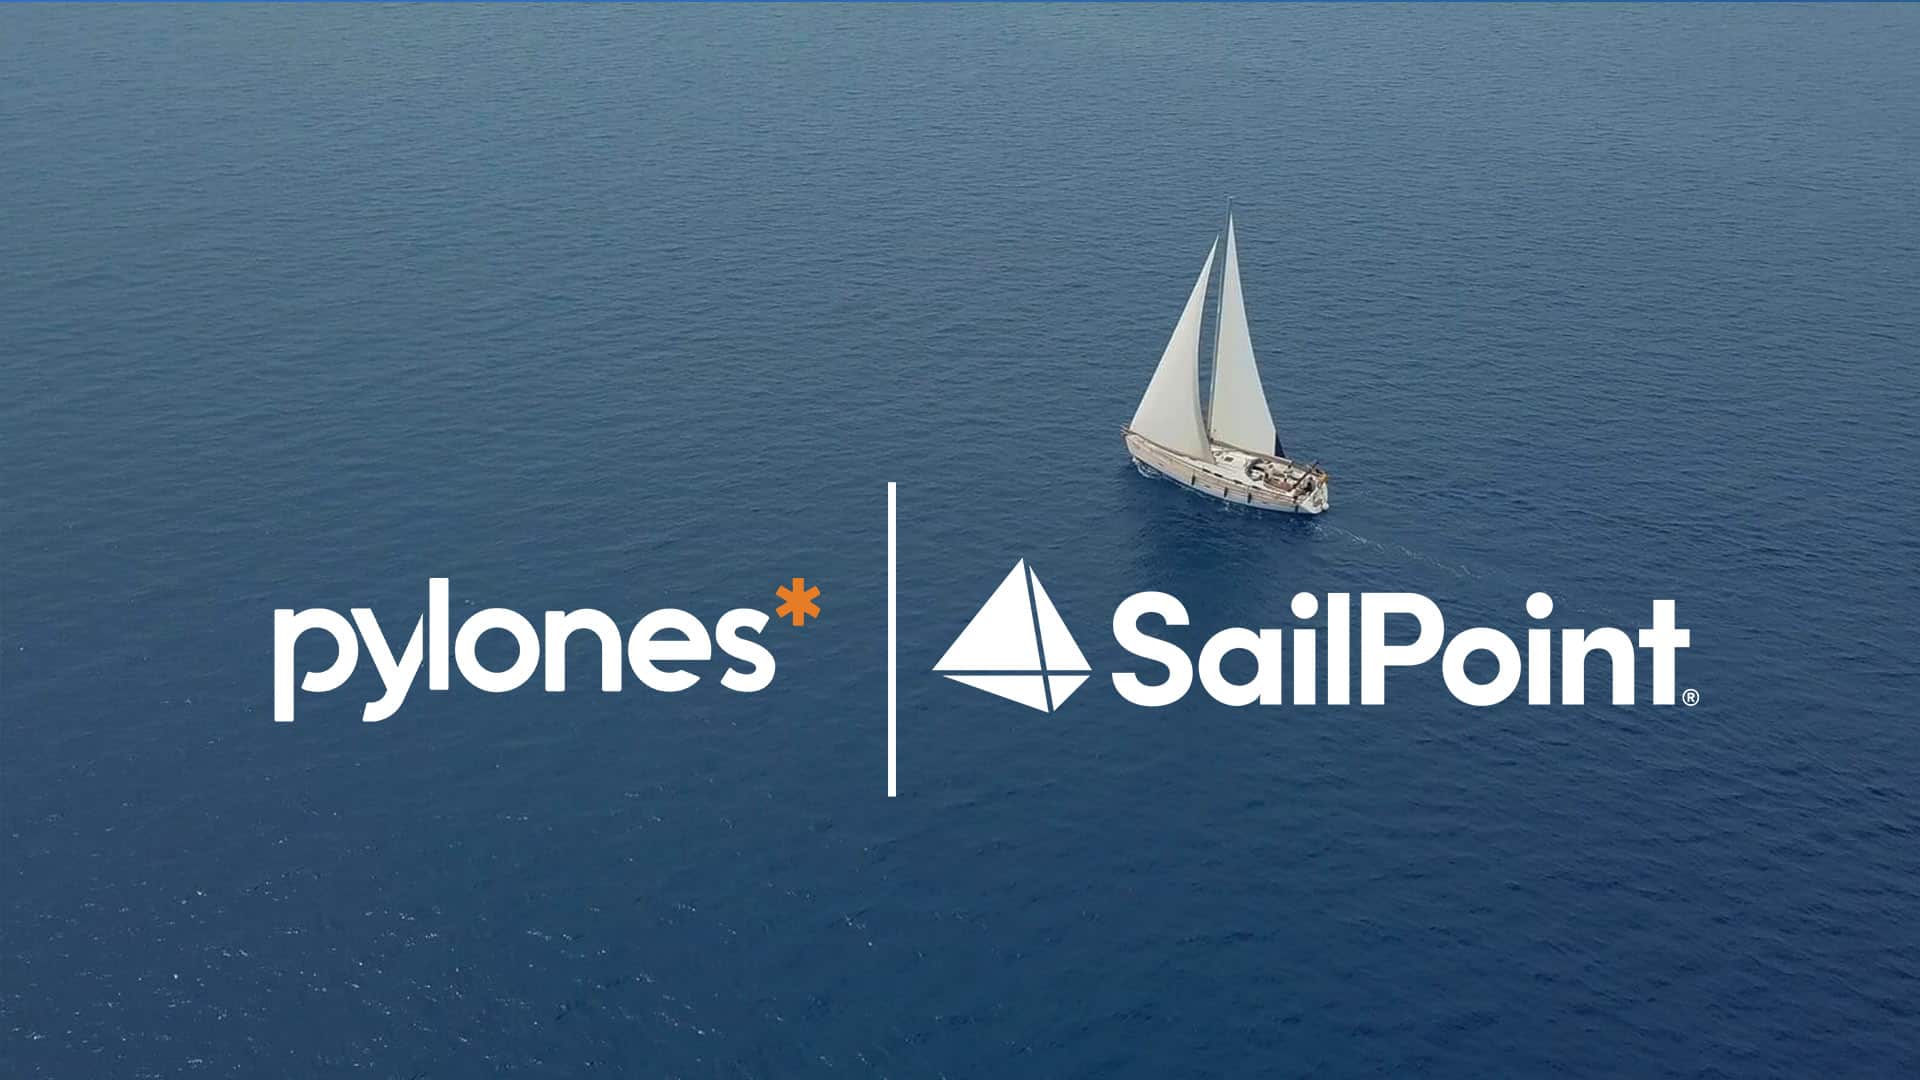 Pylones_SailPoint Partnership